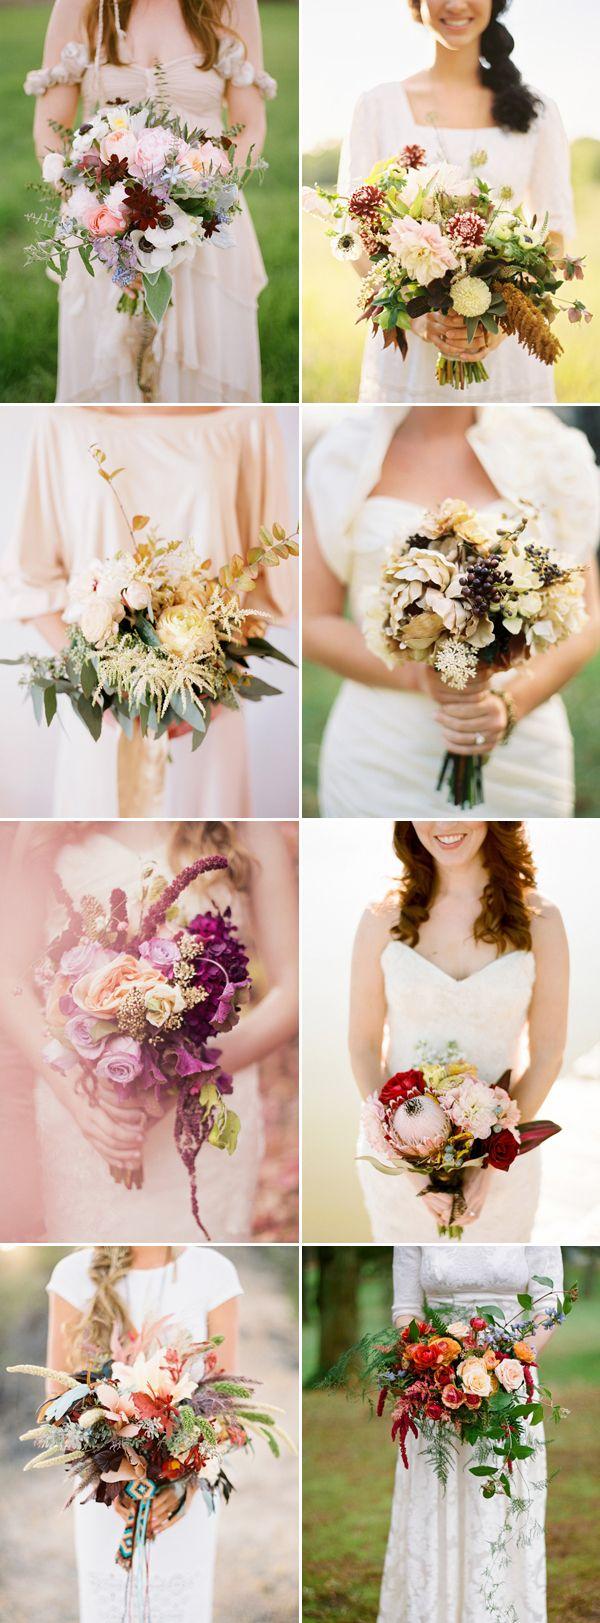 زفاف - 22 Gorgeous Fall Wedding Bouquets